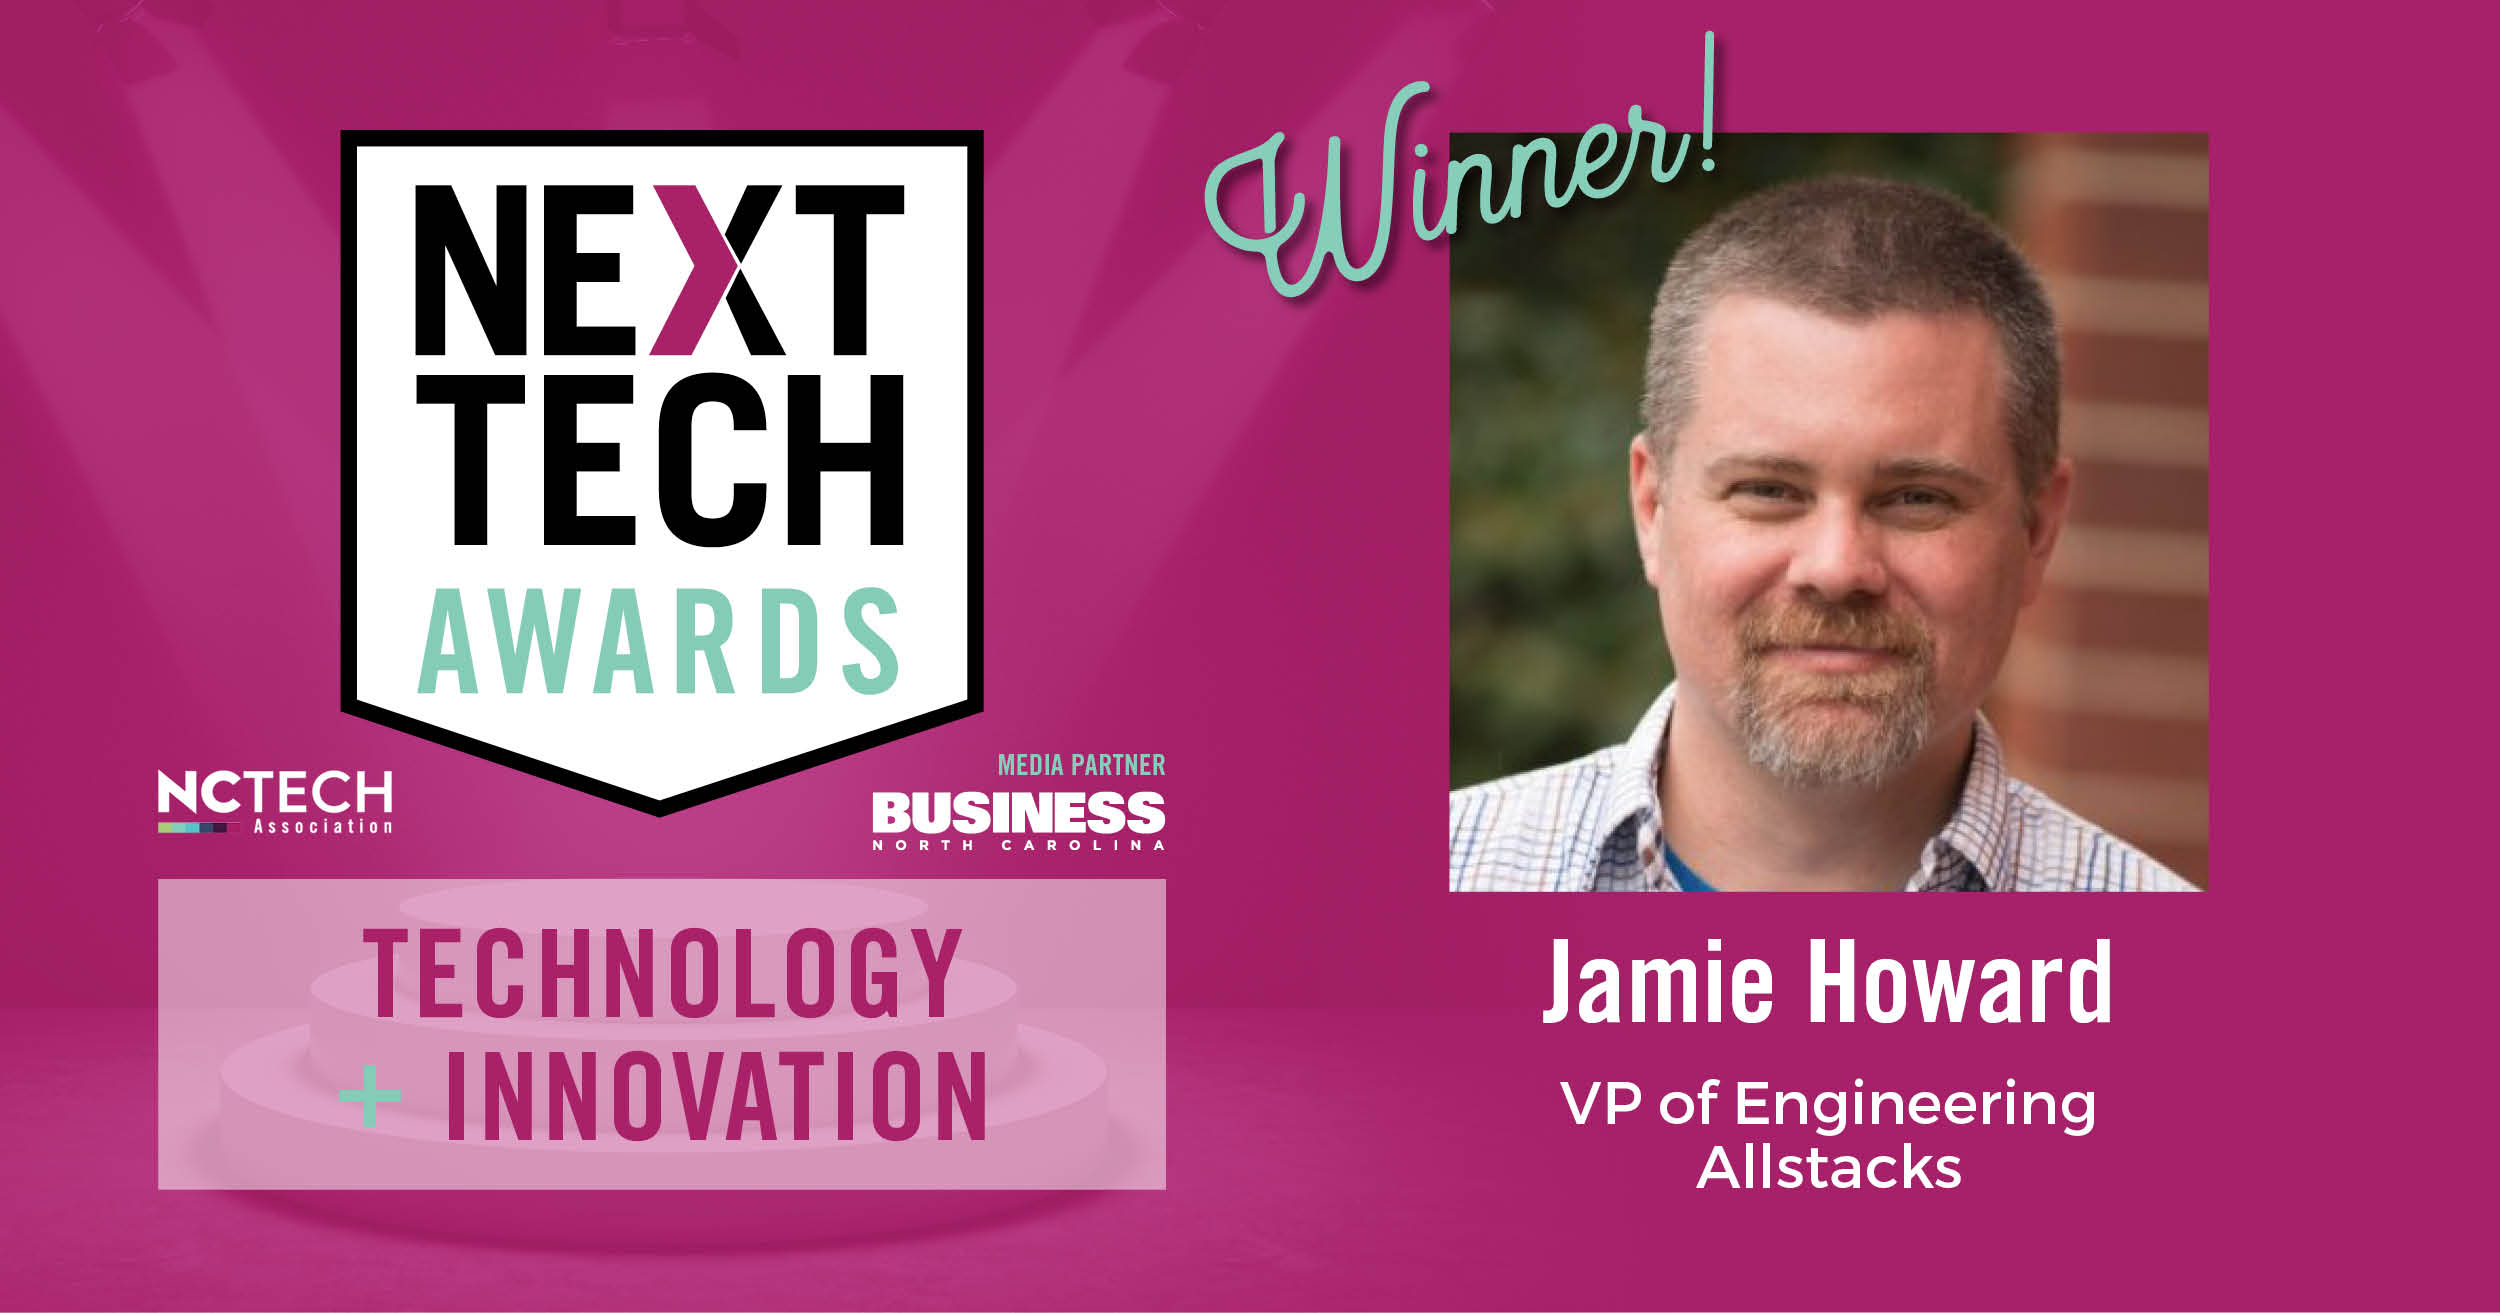 Jamie Howard received NEXT TECH Award